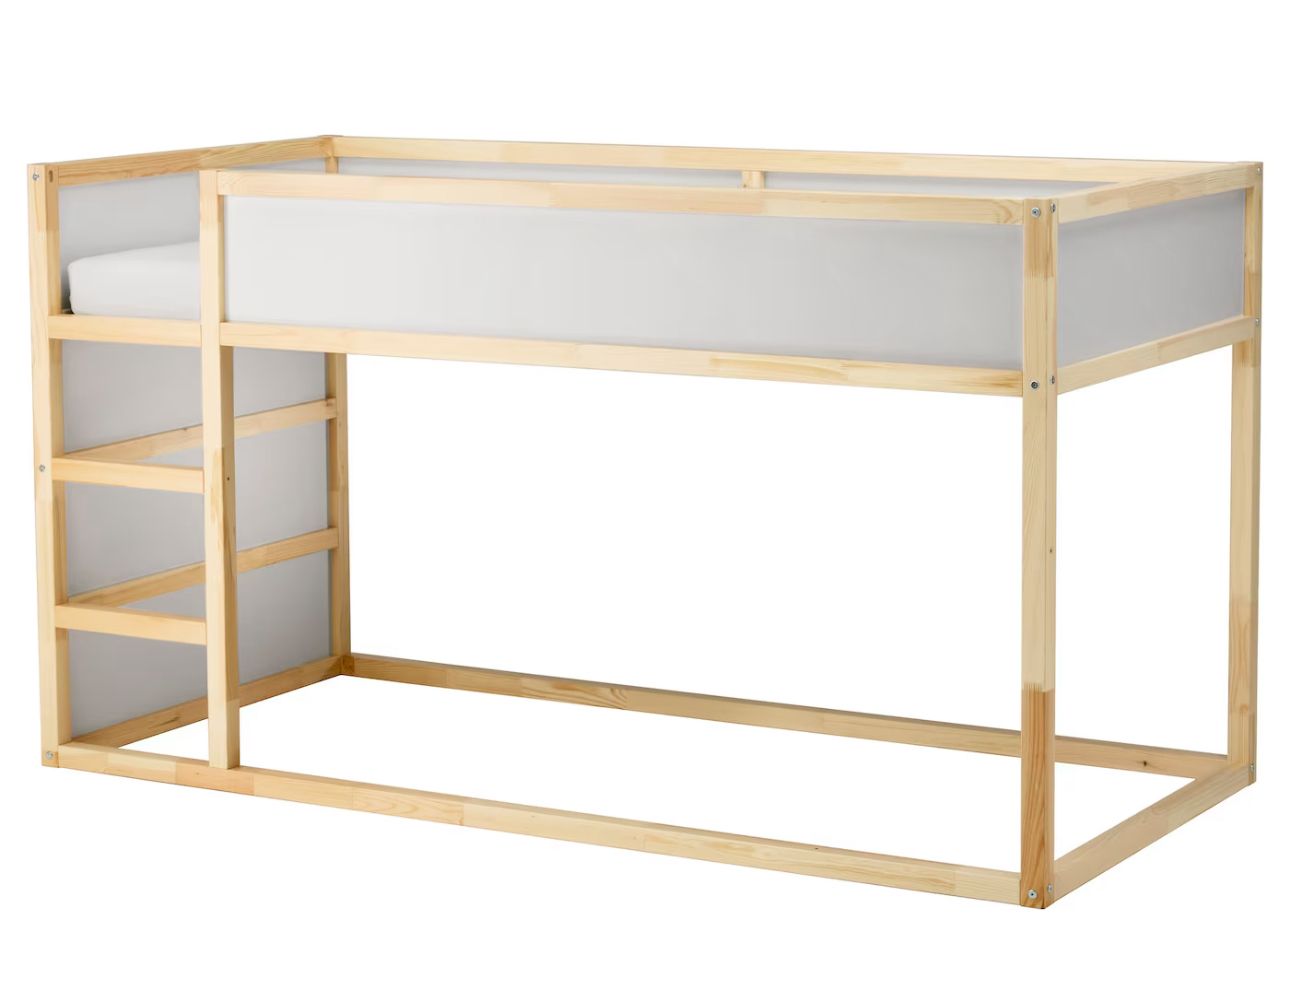 IKEA KURA bed frame